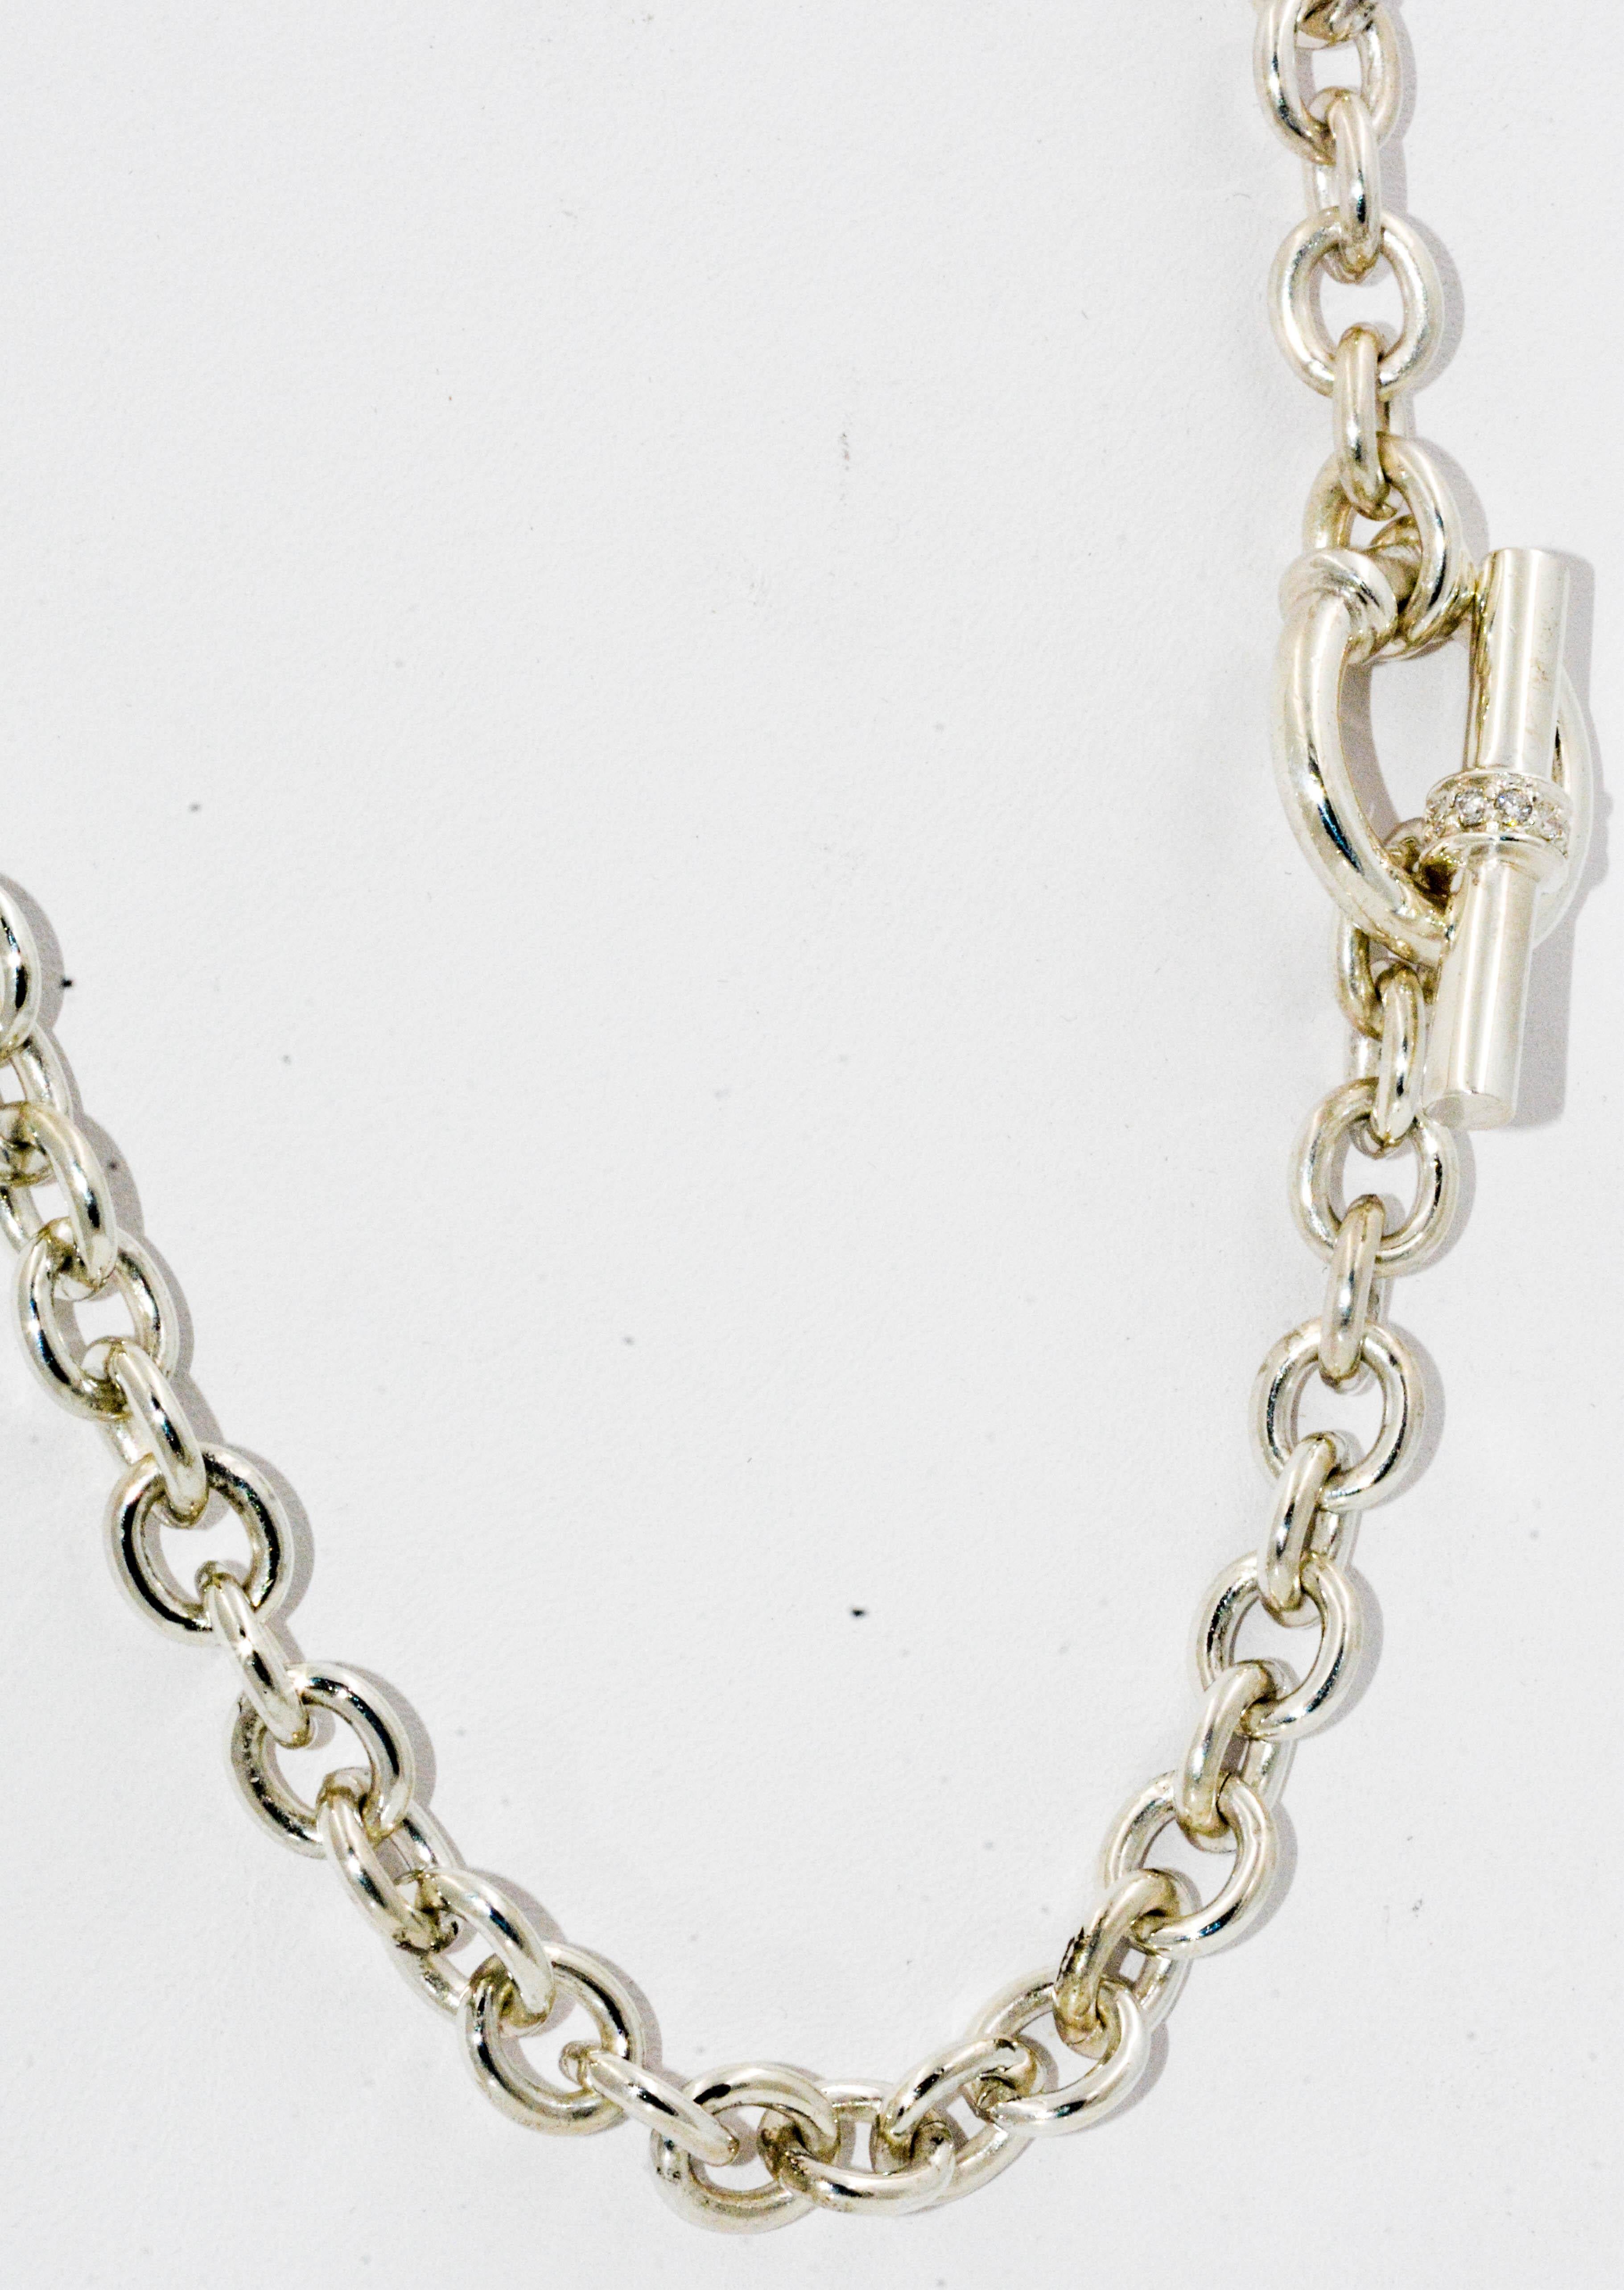 Women's Scott Slane Link Chain with Diamond Toggle Clasp